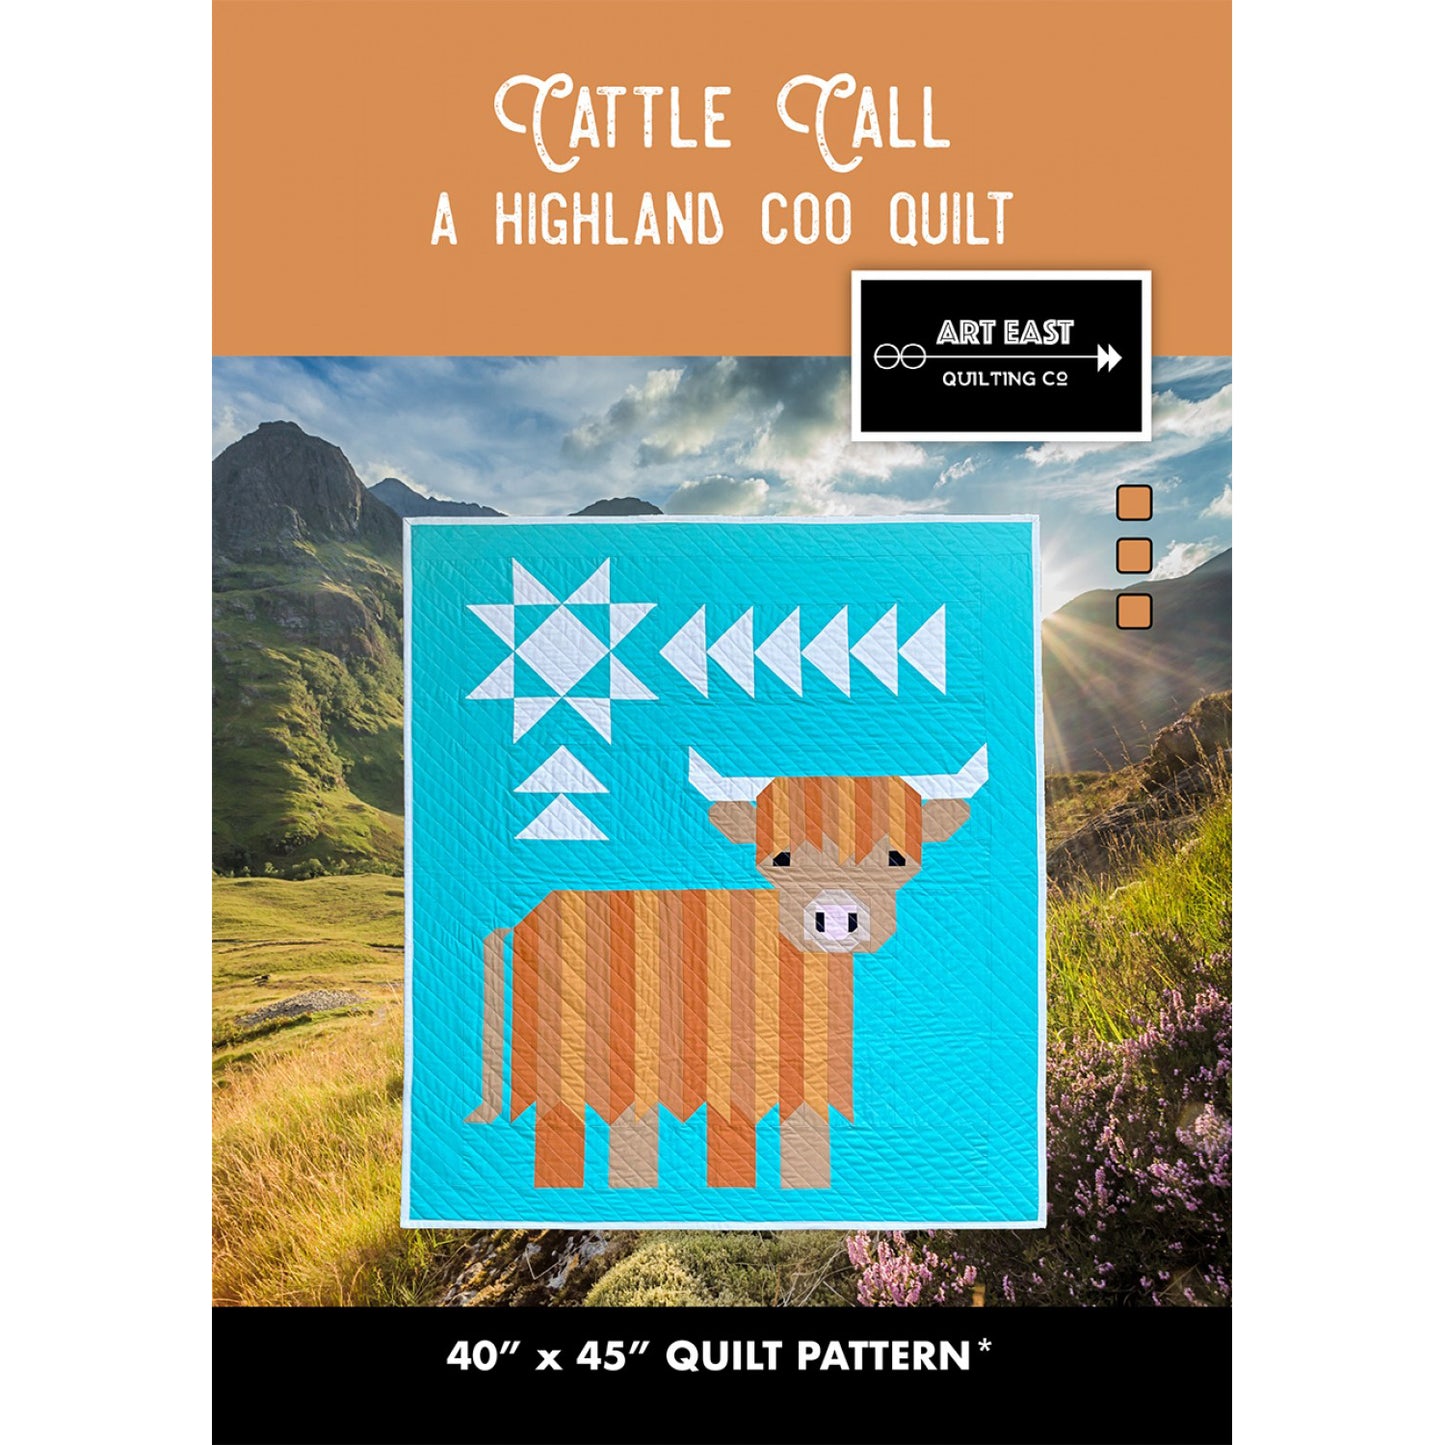 Art East Cattle Call - a Highland Coo Quilt Pattern